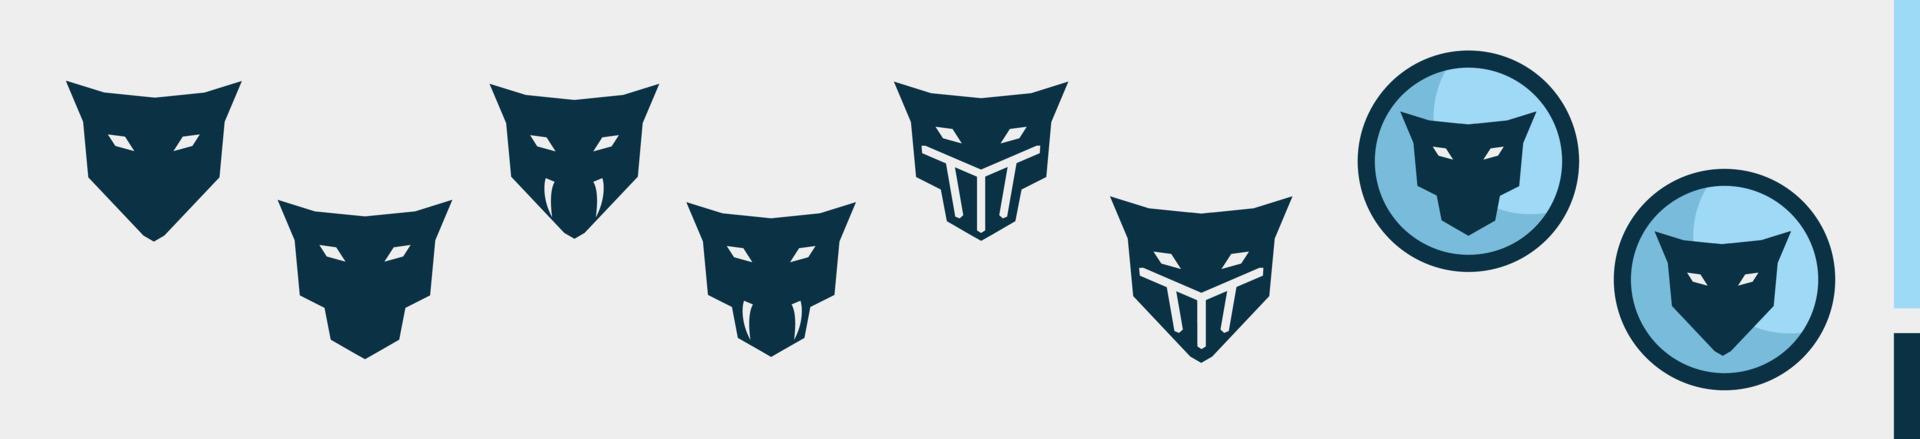 blue cat head icon set - blue jaguar head logo icon set isolated on white background vector